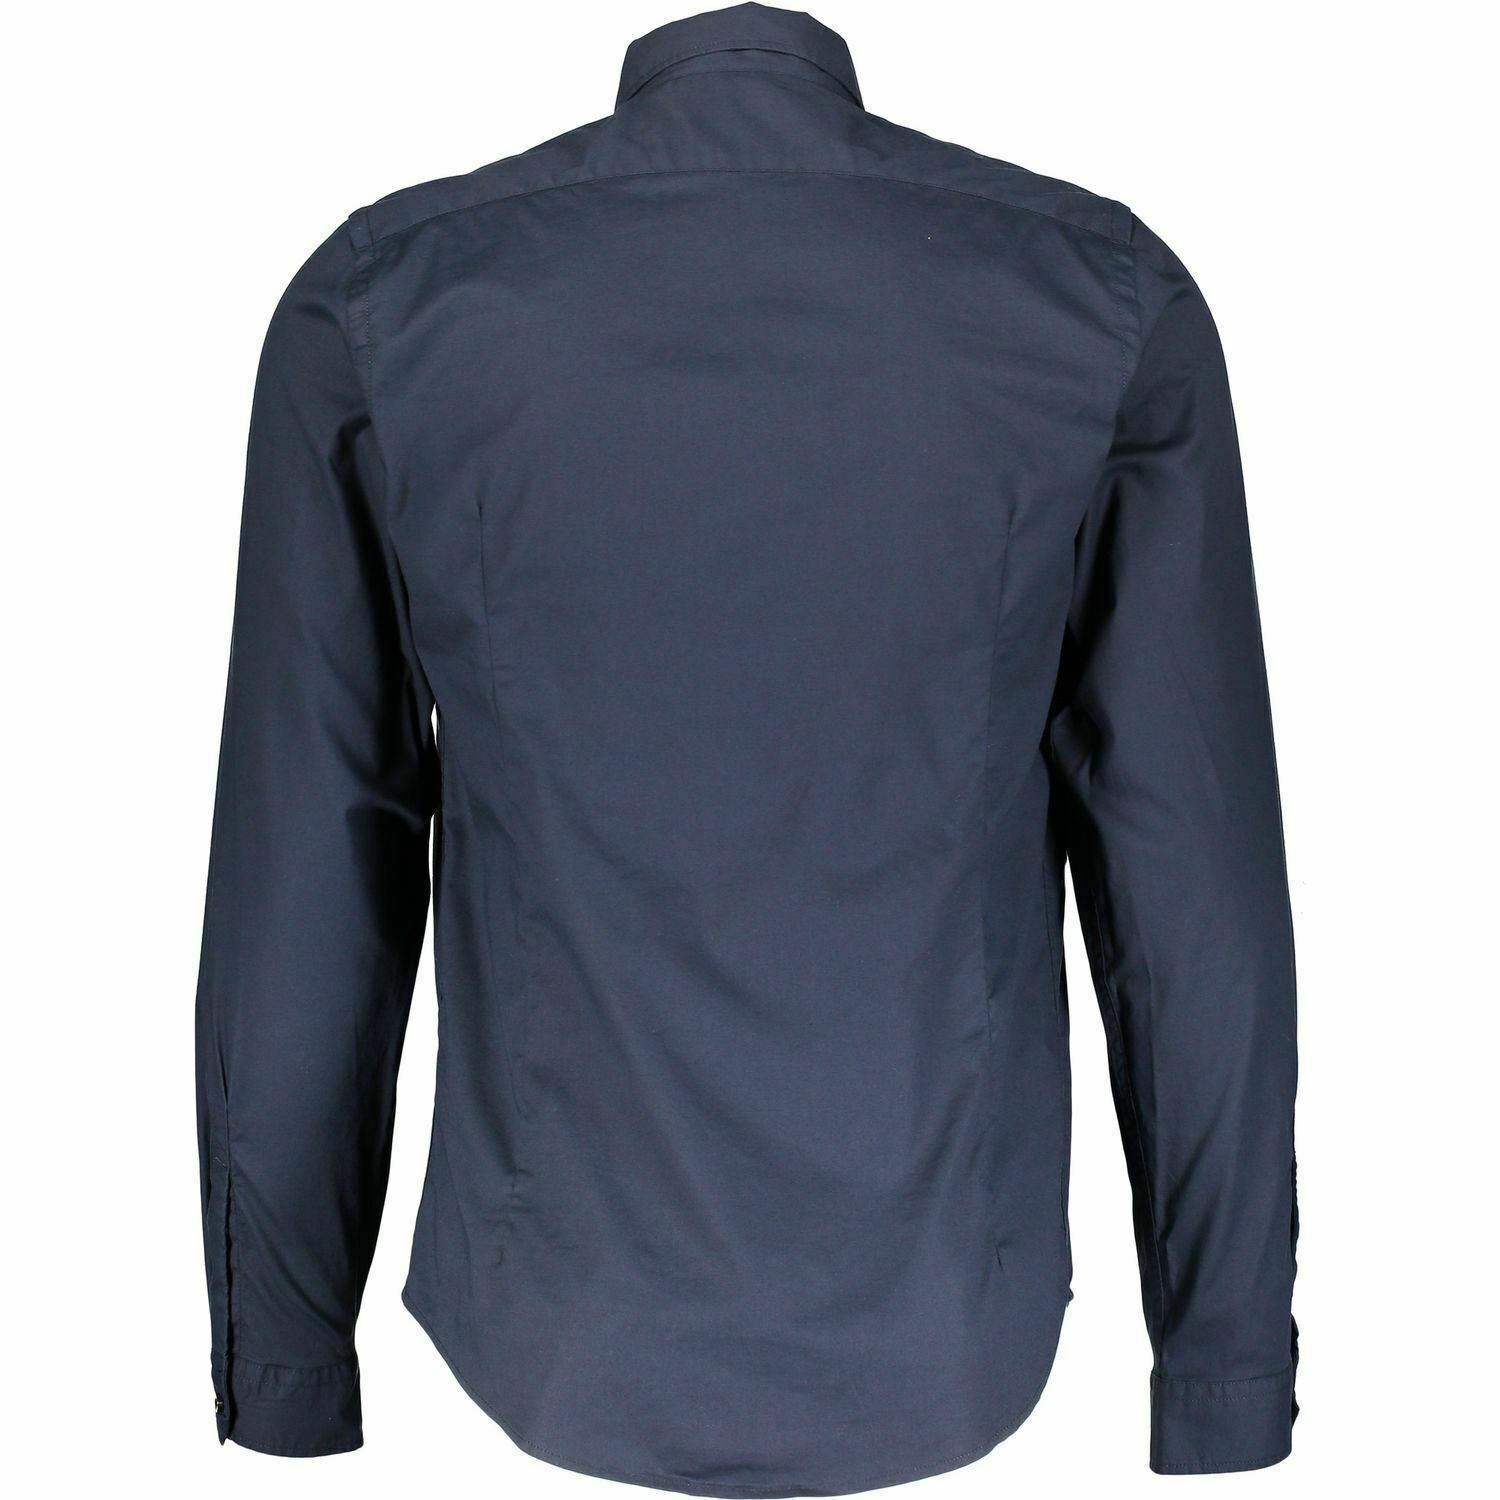 REPLAY Men's Navy Blue Cotton Long Sleeve Shirt size M & size L